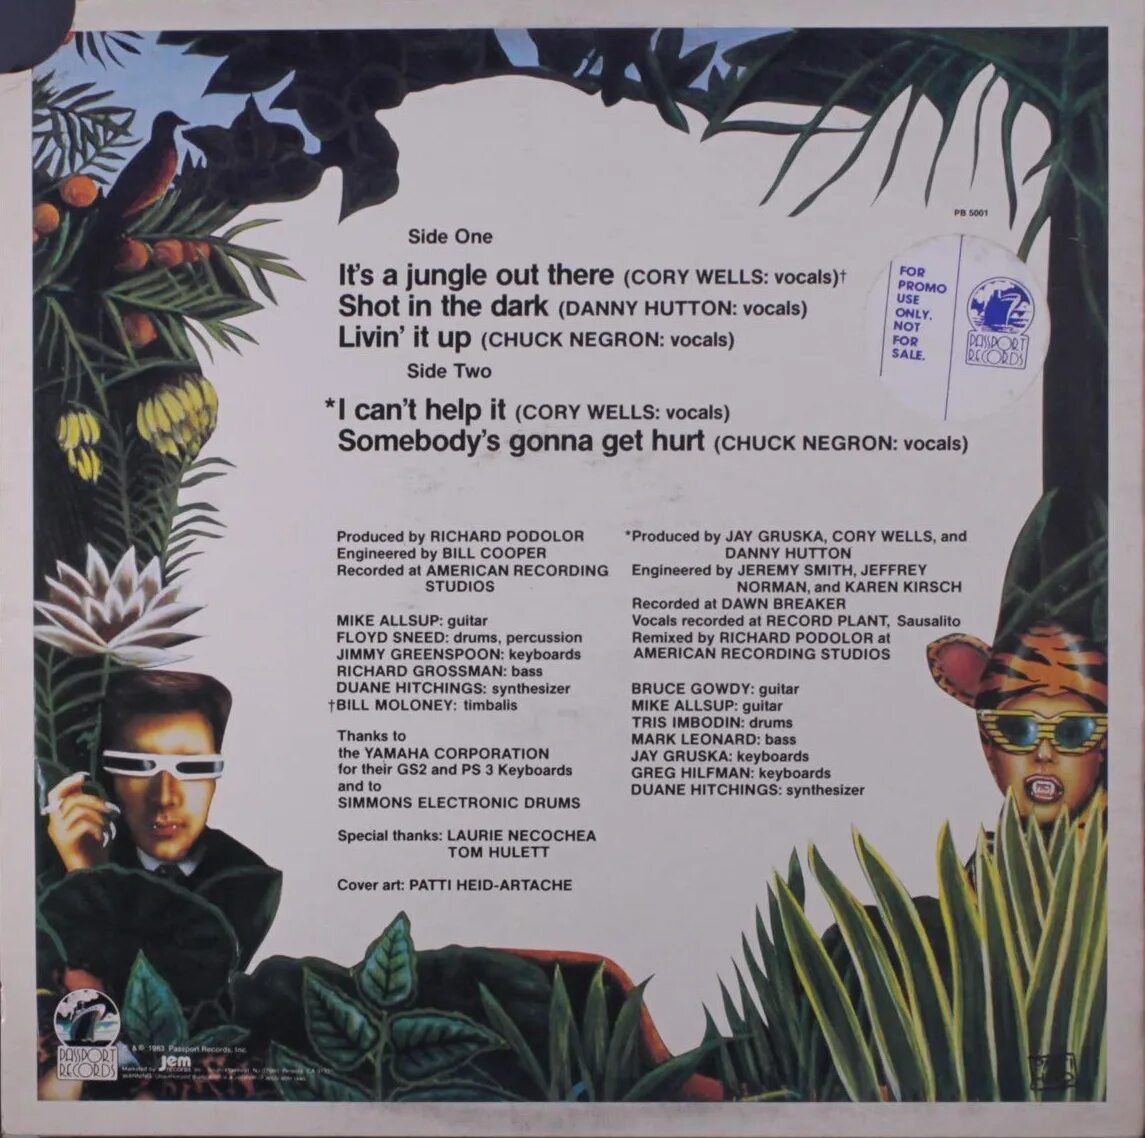 Jungle текст. It's a Jungle three Dog Night. King of the Jungle текст. Mastedon - 1989 - it's a Jungle out there. Jungle песня перевод